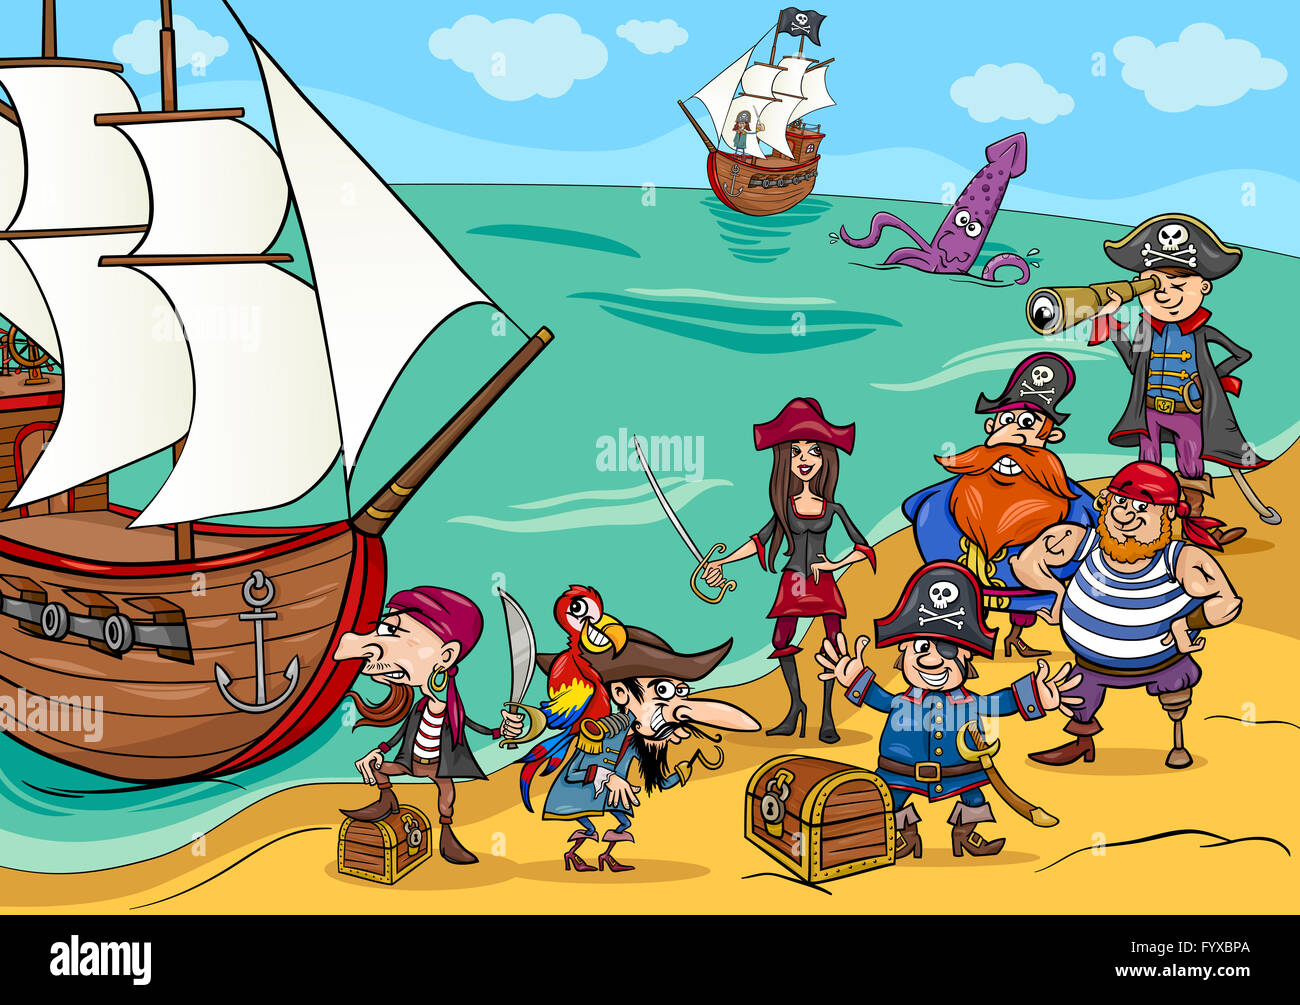 Pirati con nave cartoon Foto stock - Alamy